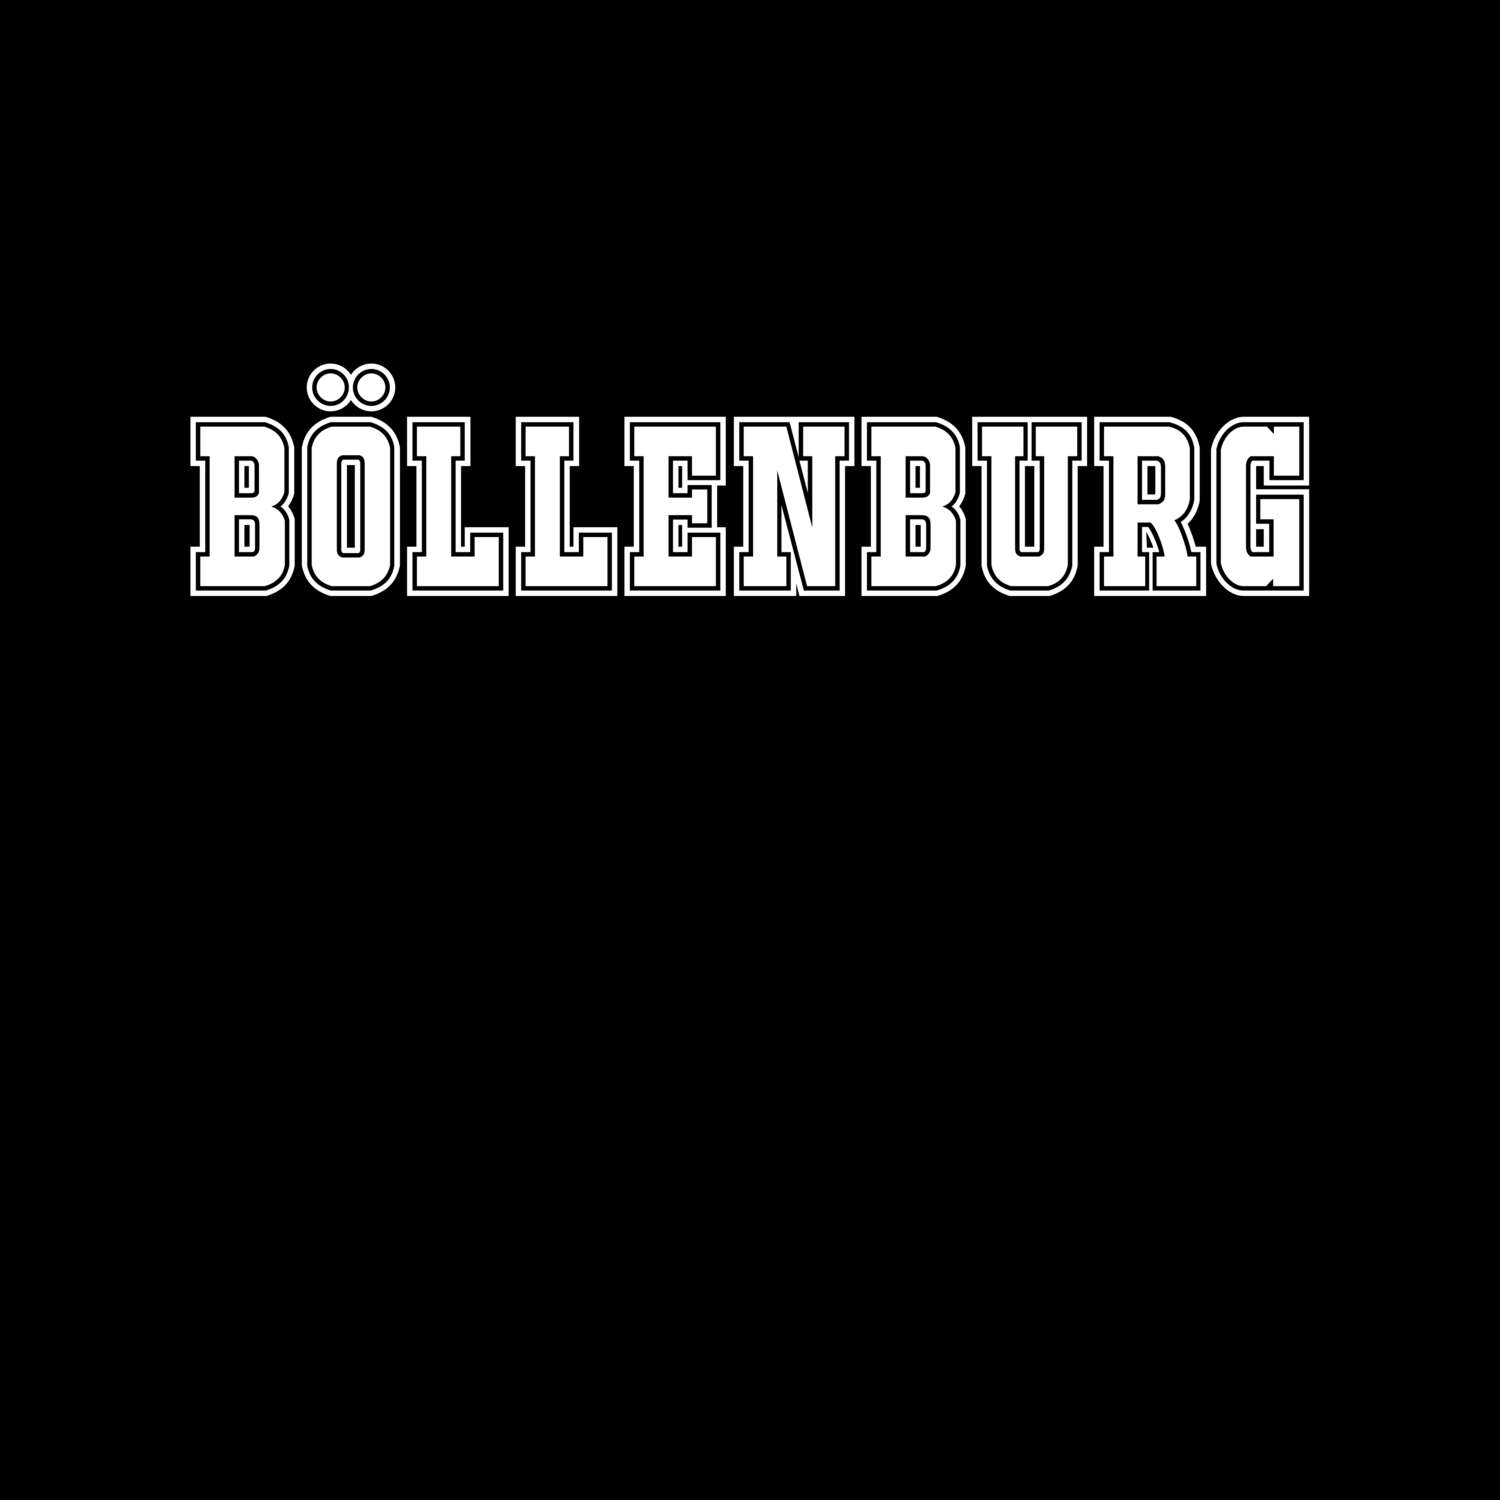 Böllenburg T-Shirt »Classic«